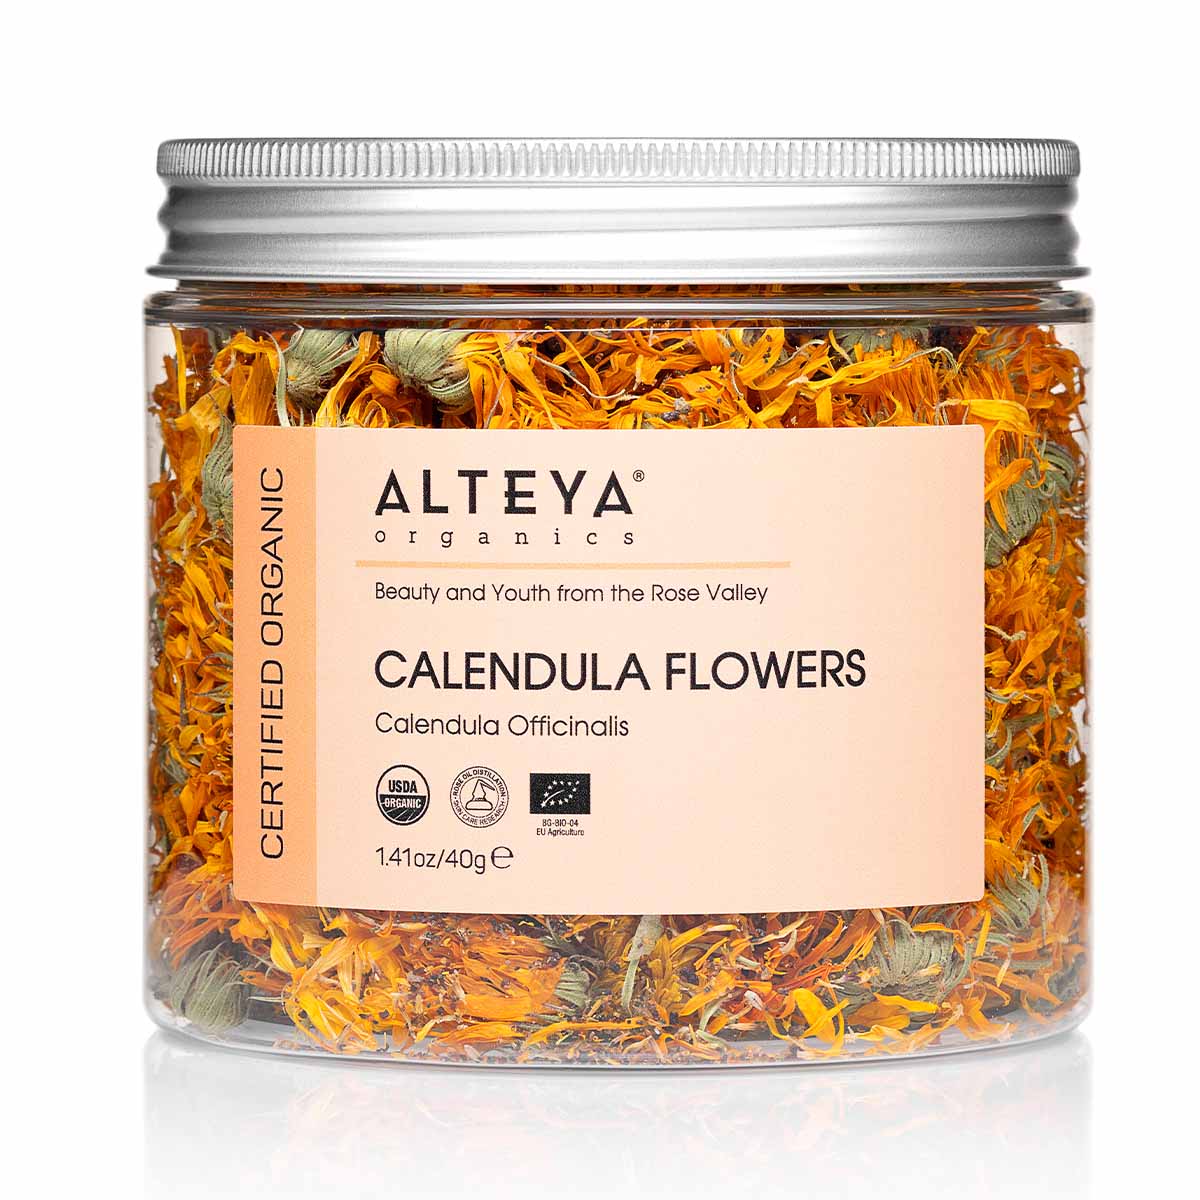 Dry Calendula Flowers in a jar from Alteya Organics promote wellness.